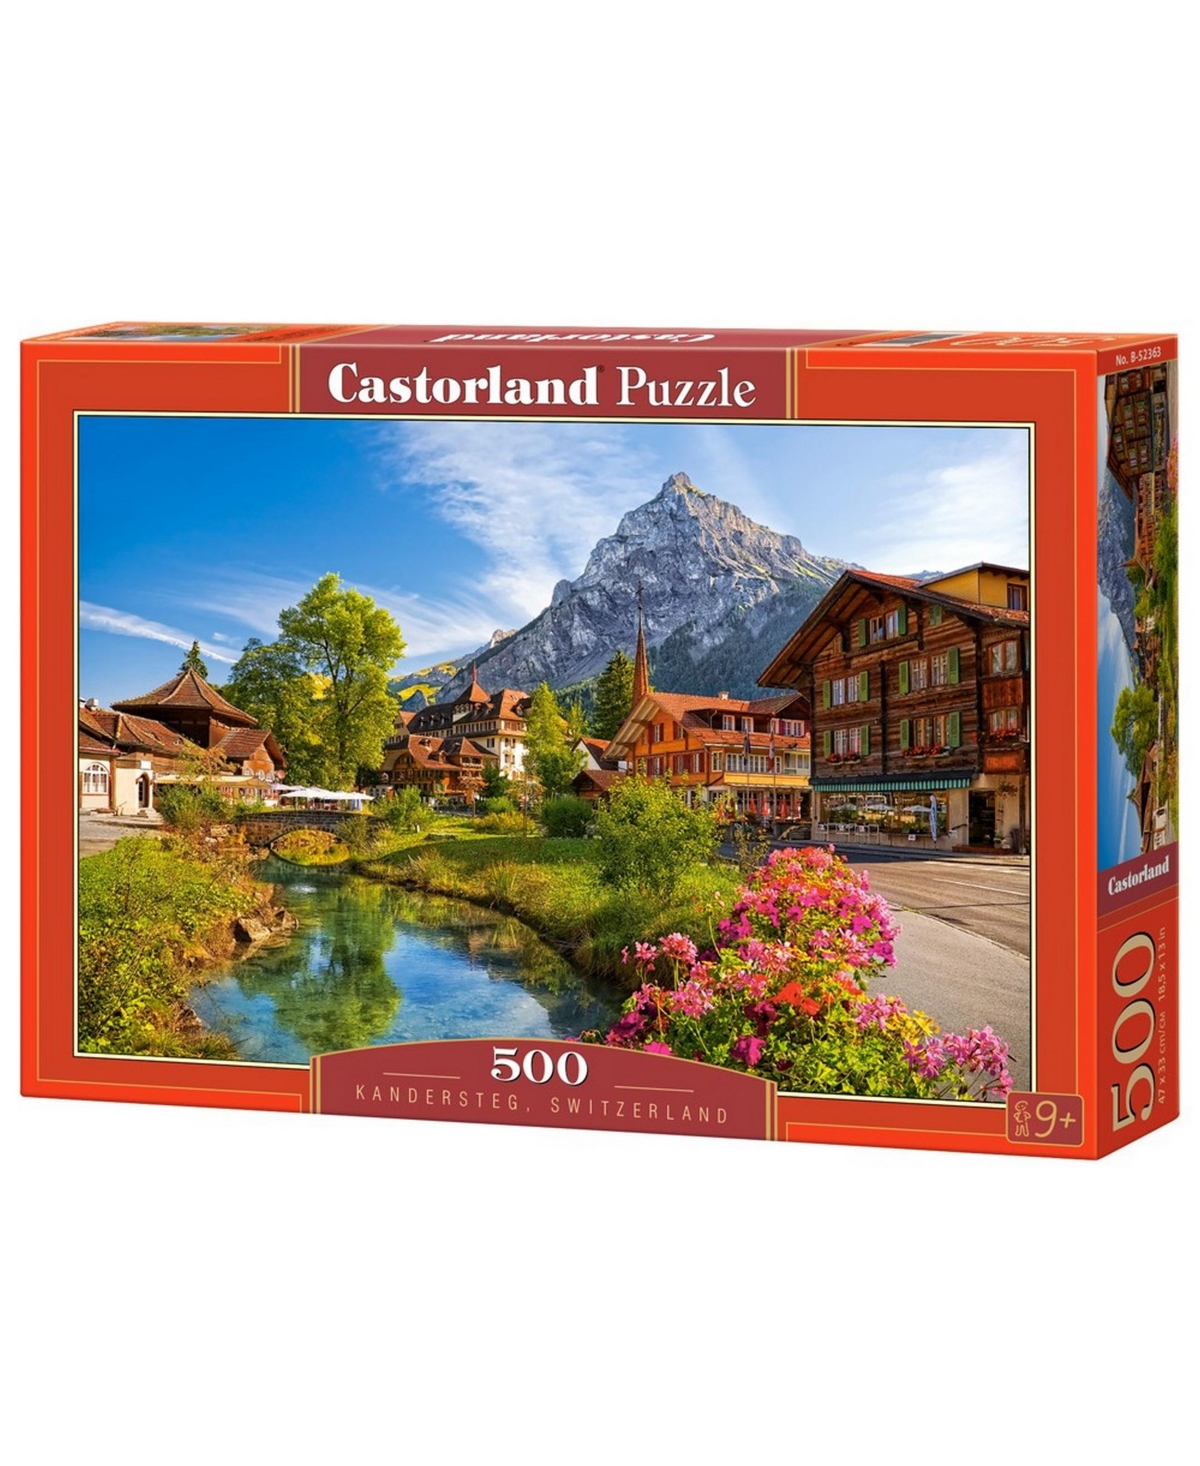 Castorland Kandersteg, Switzerland Jigsaw Puzzle Set, 500 Piece In Multicolor